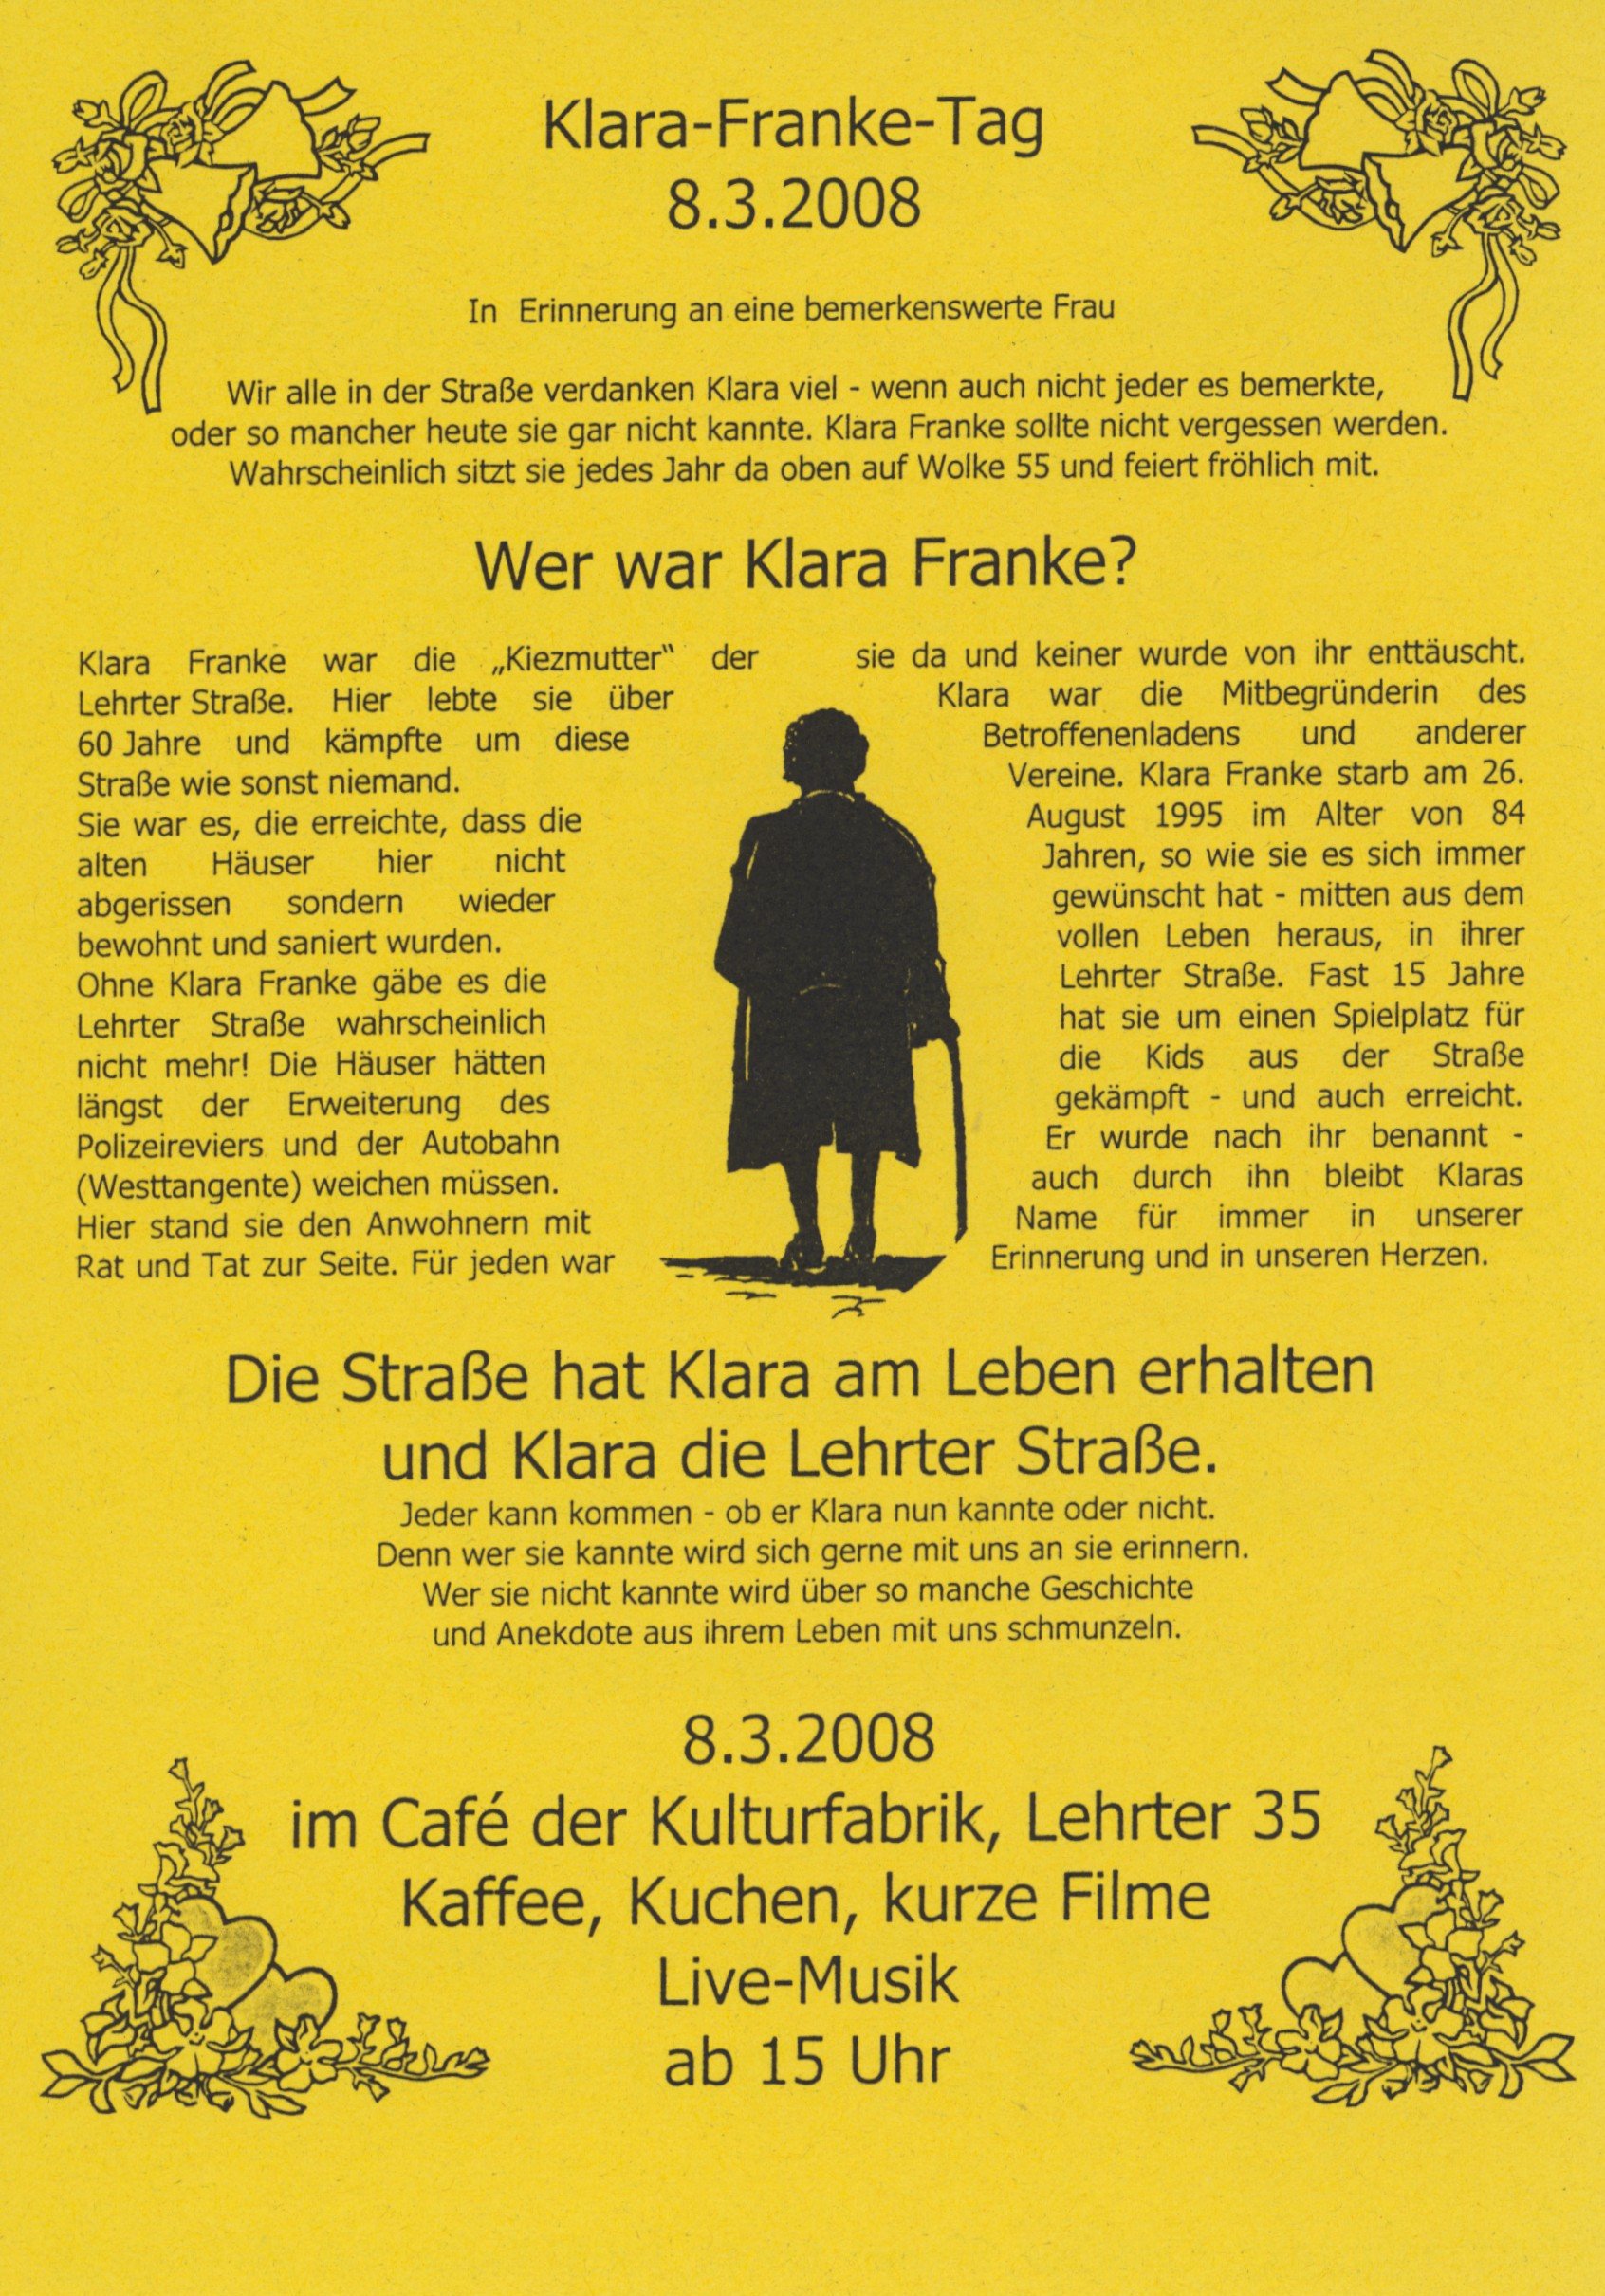 Fotokopierter Flyer zum Klara-Franke-Tag am 08.03.2008 (B-Laden CC BY-NC-SA)